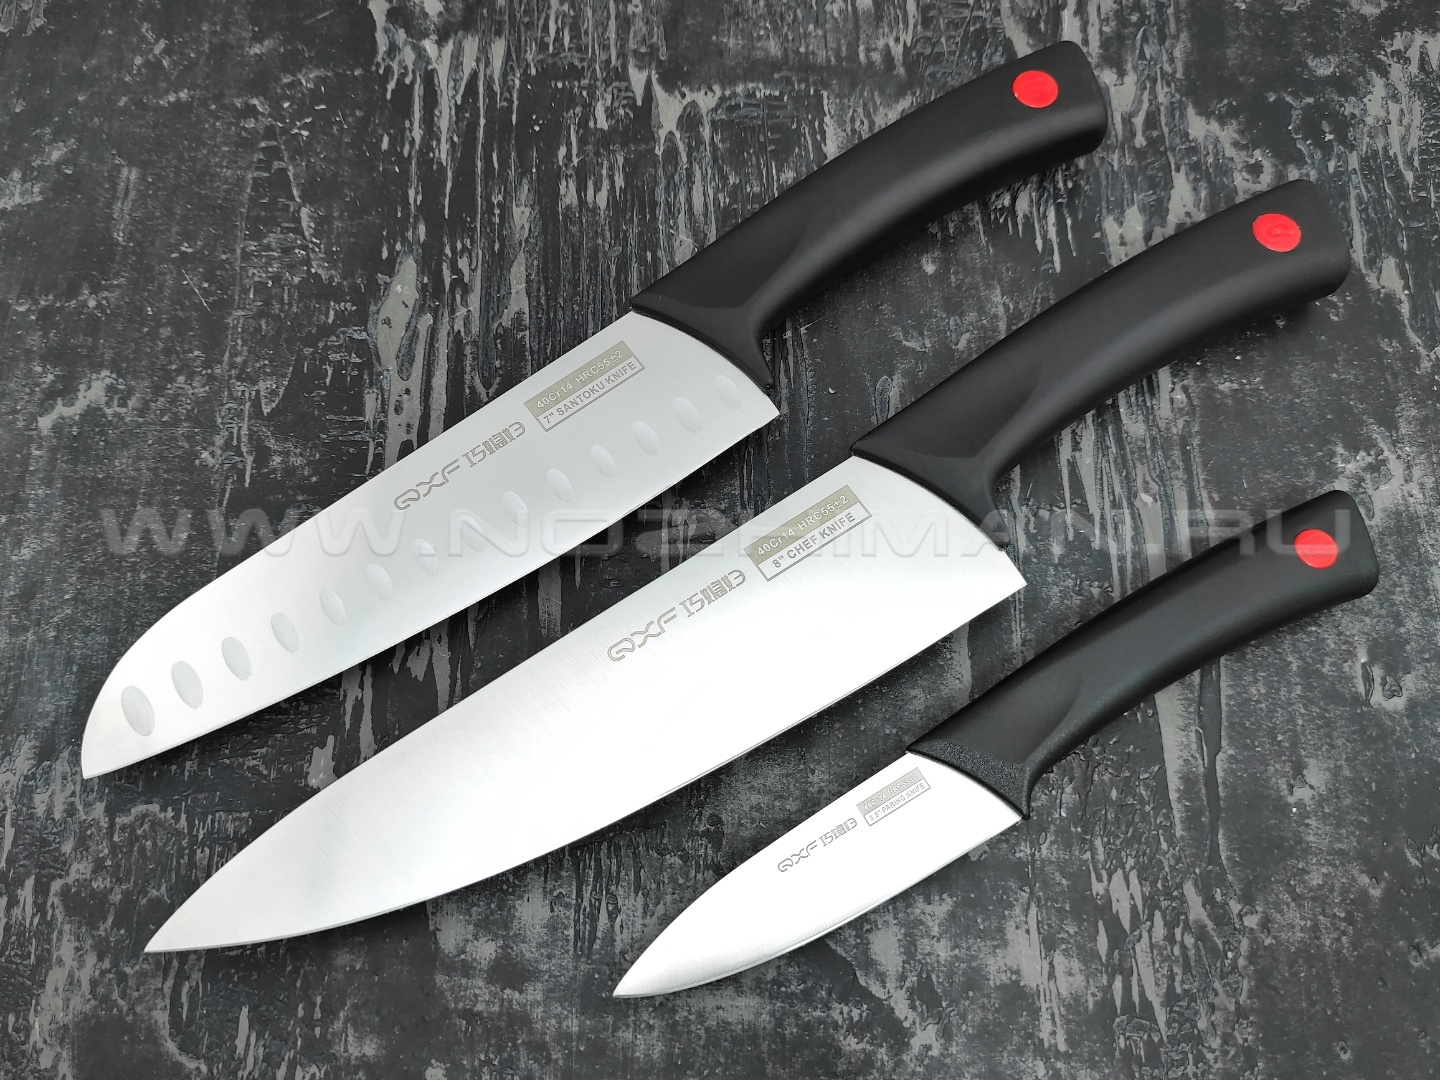 QXF набор из трех кухонных ножей R-43-3 сталь 40Cr14, рукоять ABS